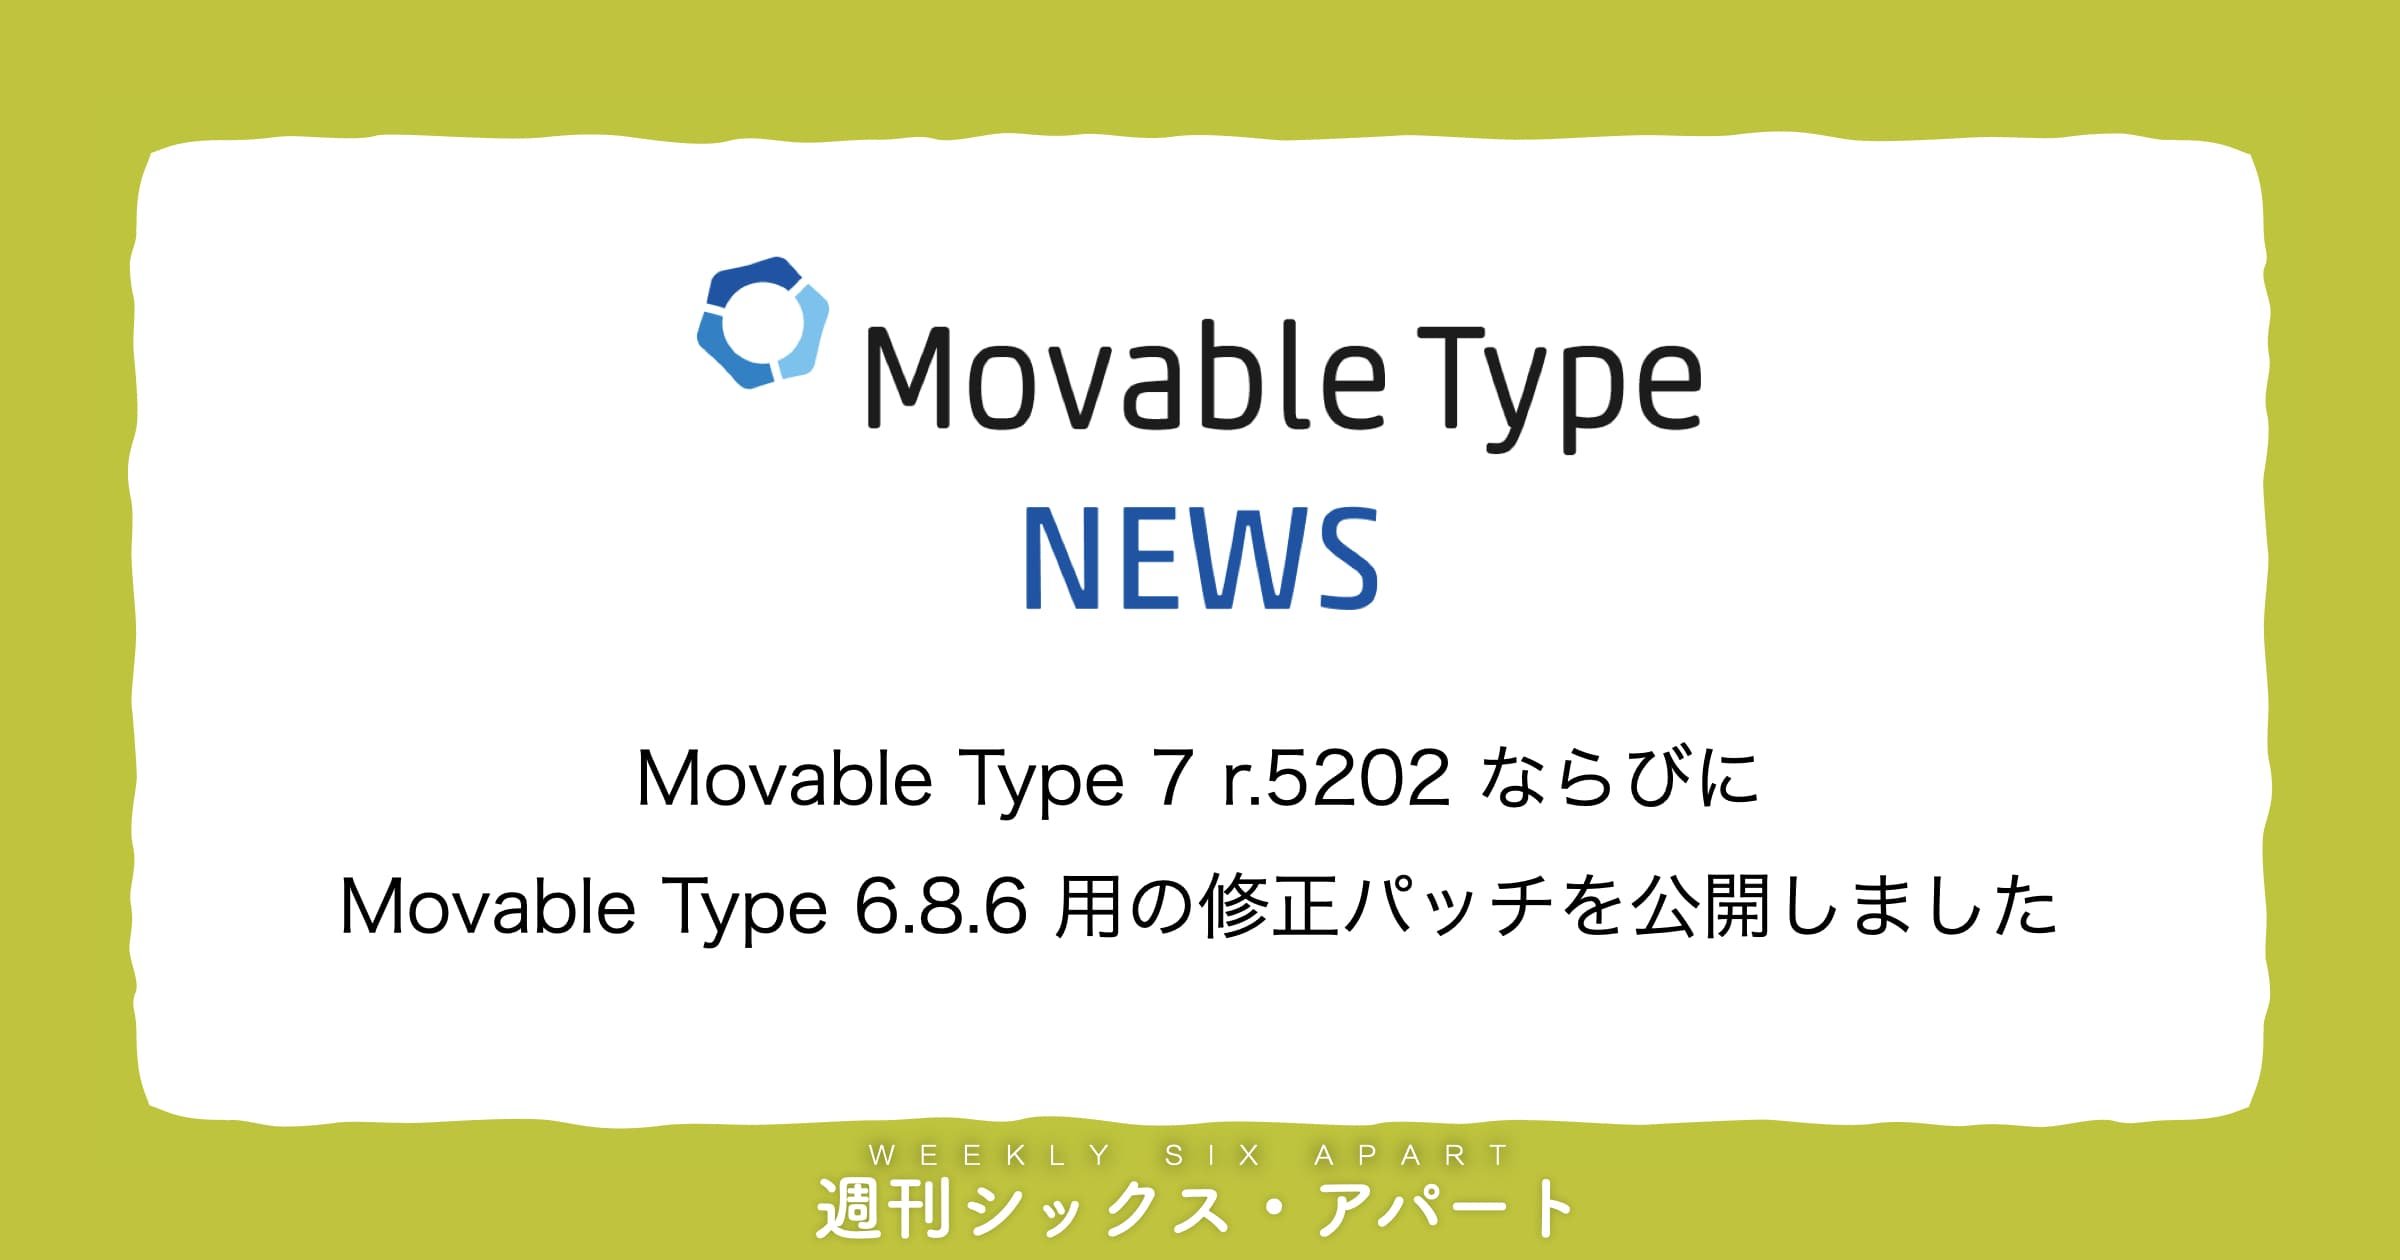 Movable Type 7 r.5202 ならびに、Movable Type 6.8.6 用の修正パッチを公開しました #週刊SA